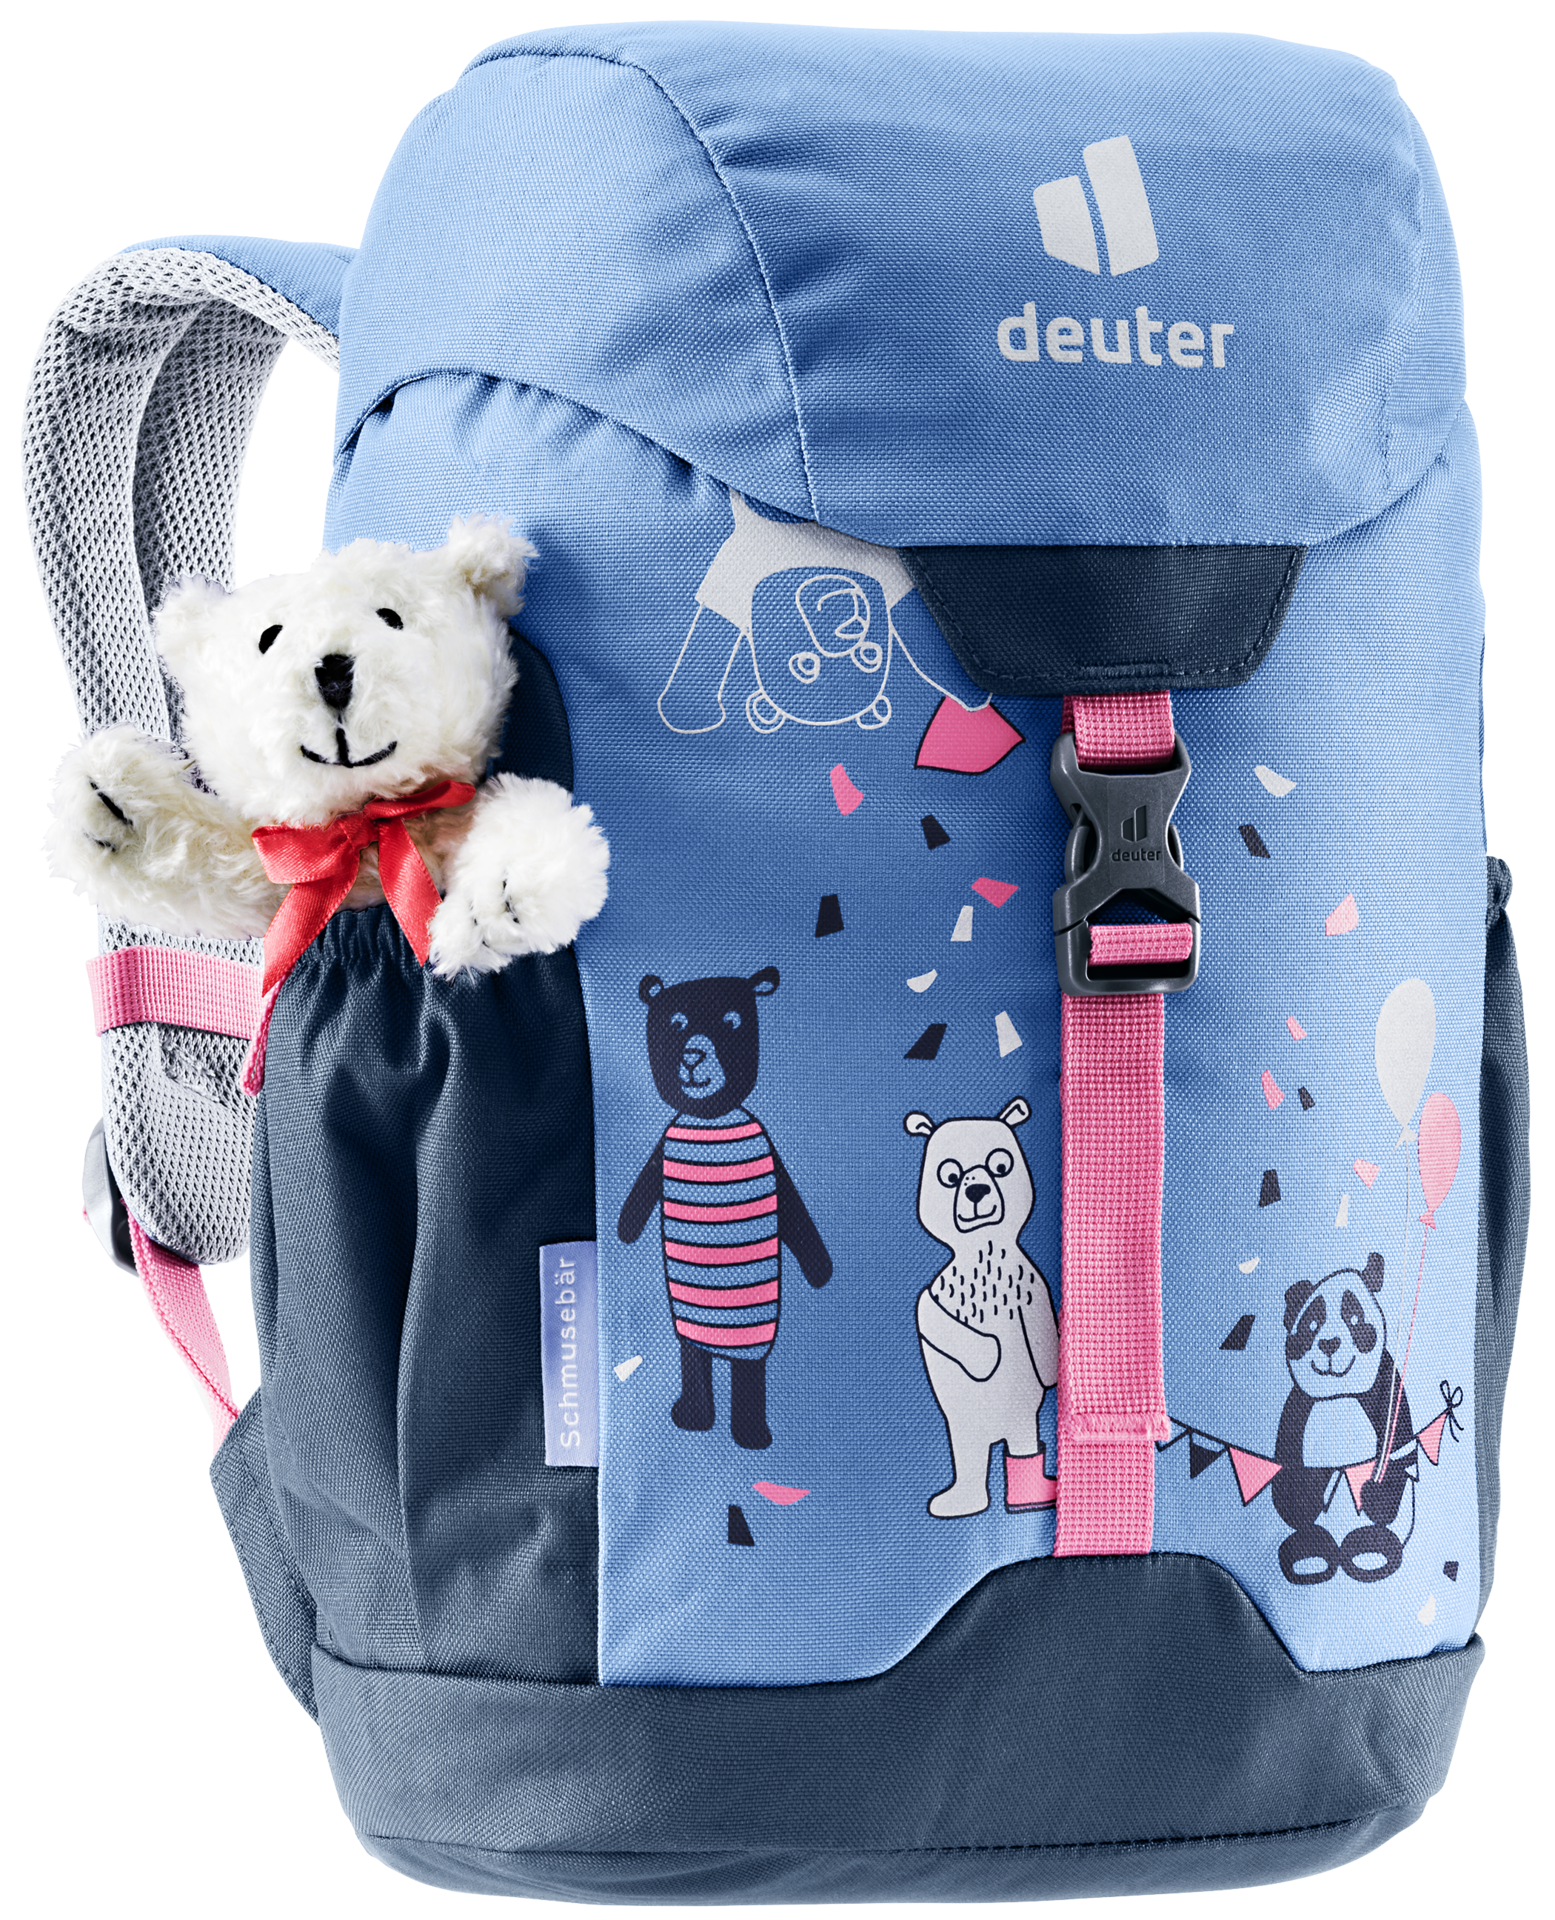 Schmusebär Children\'s backpack | deuter